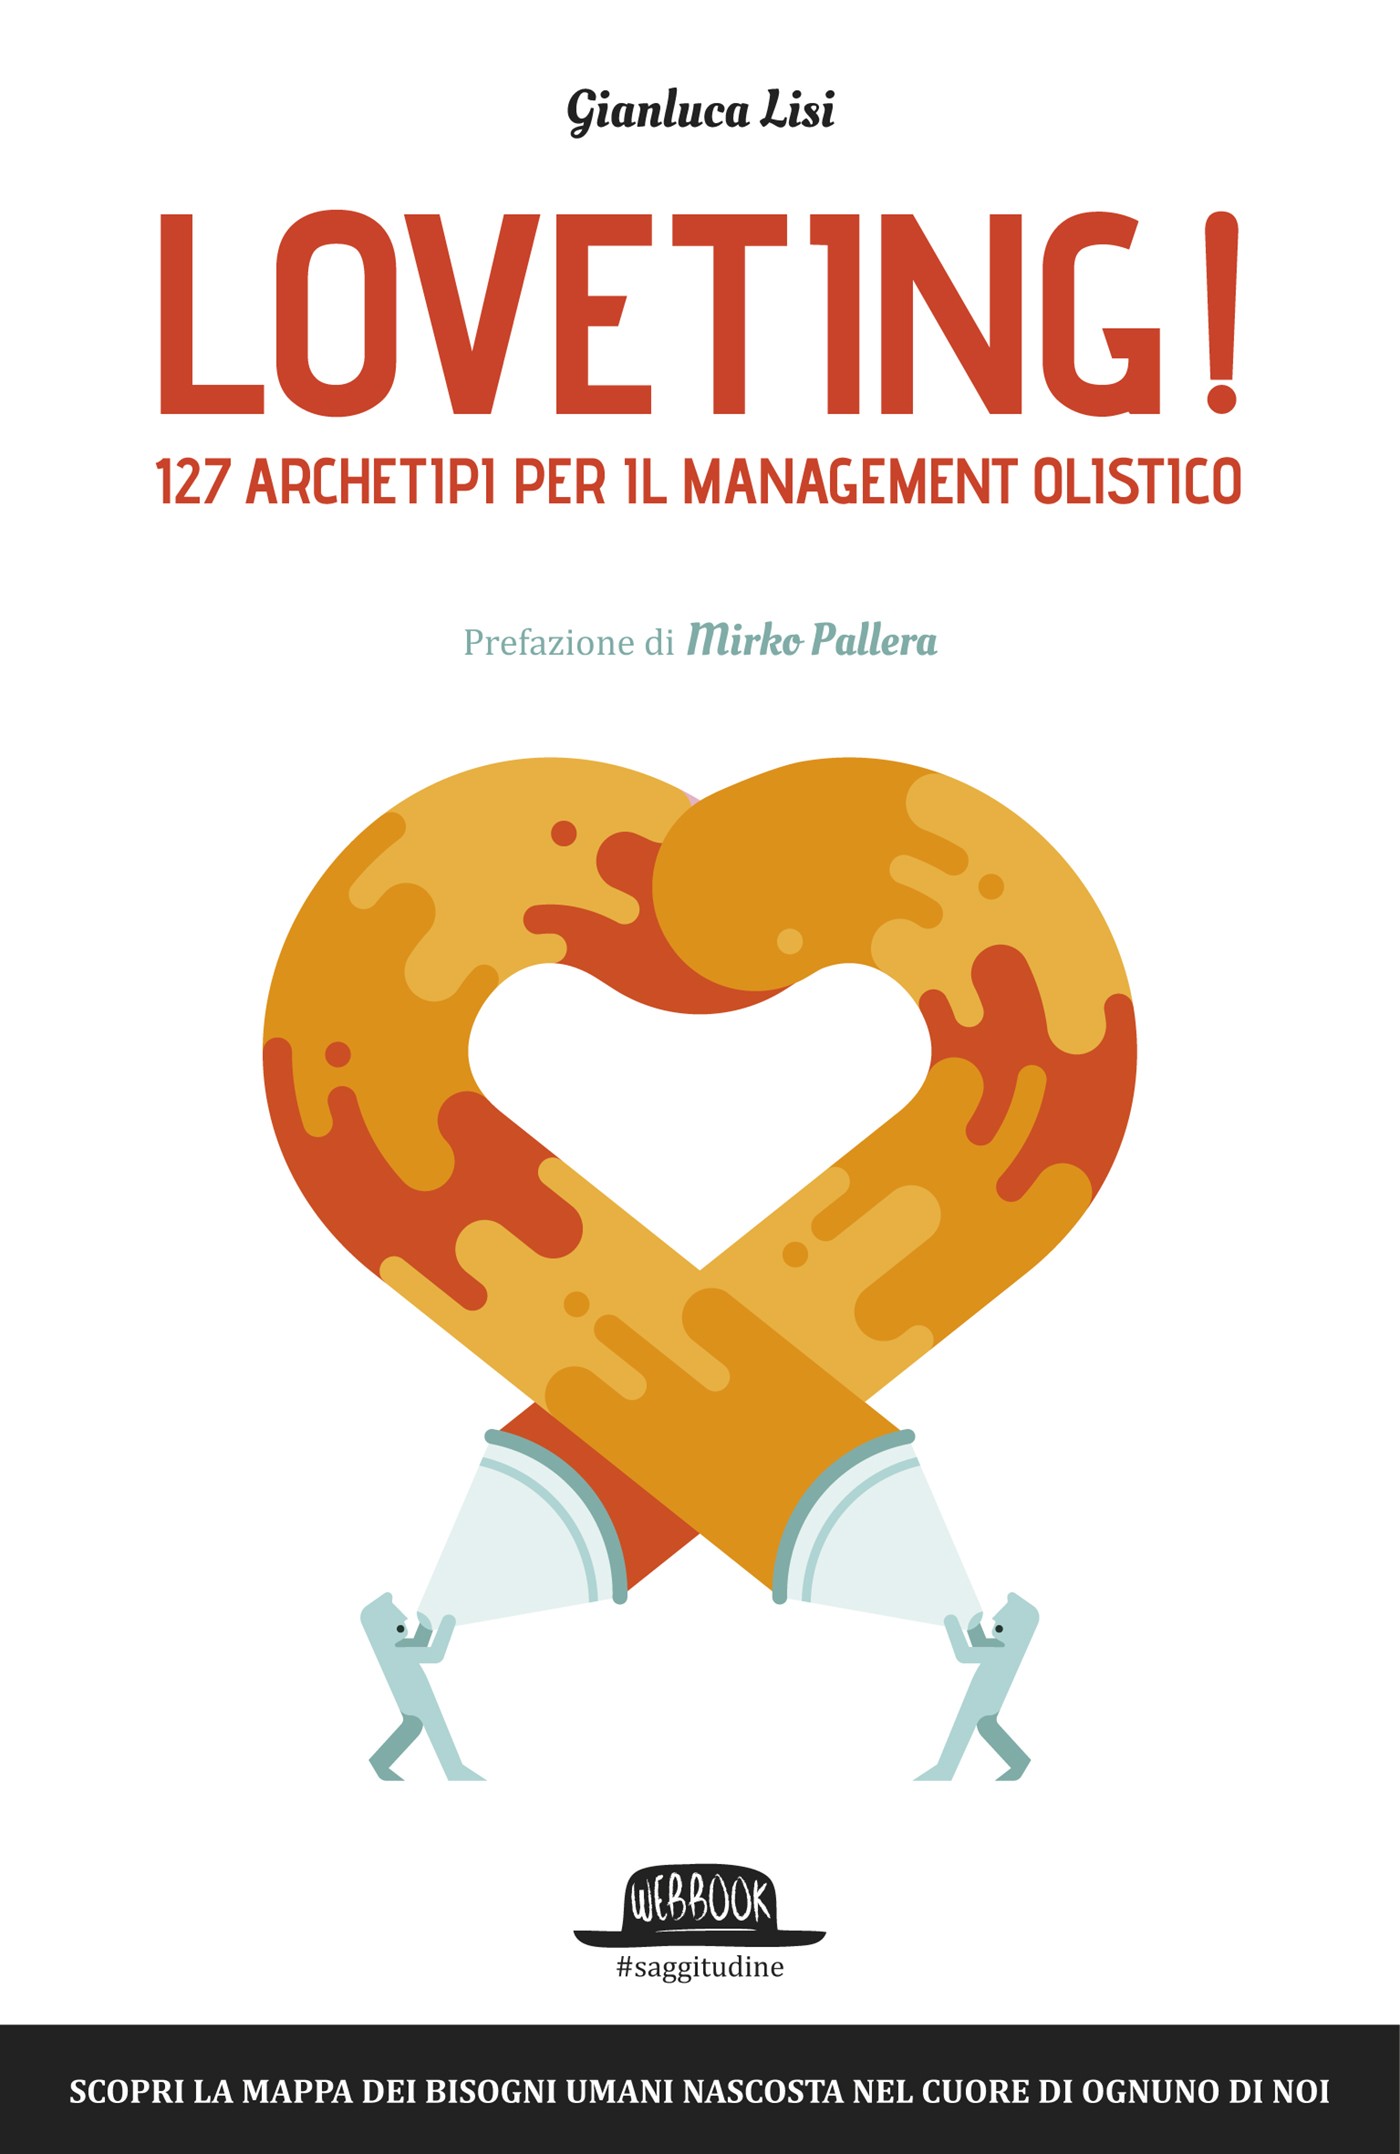 Loveting! 127 Archetipi per il Management Olistico - Librerie.coop